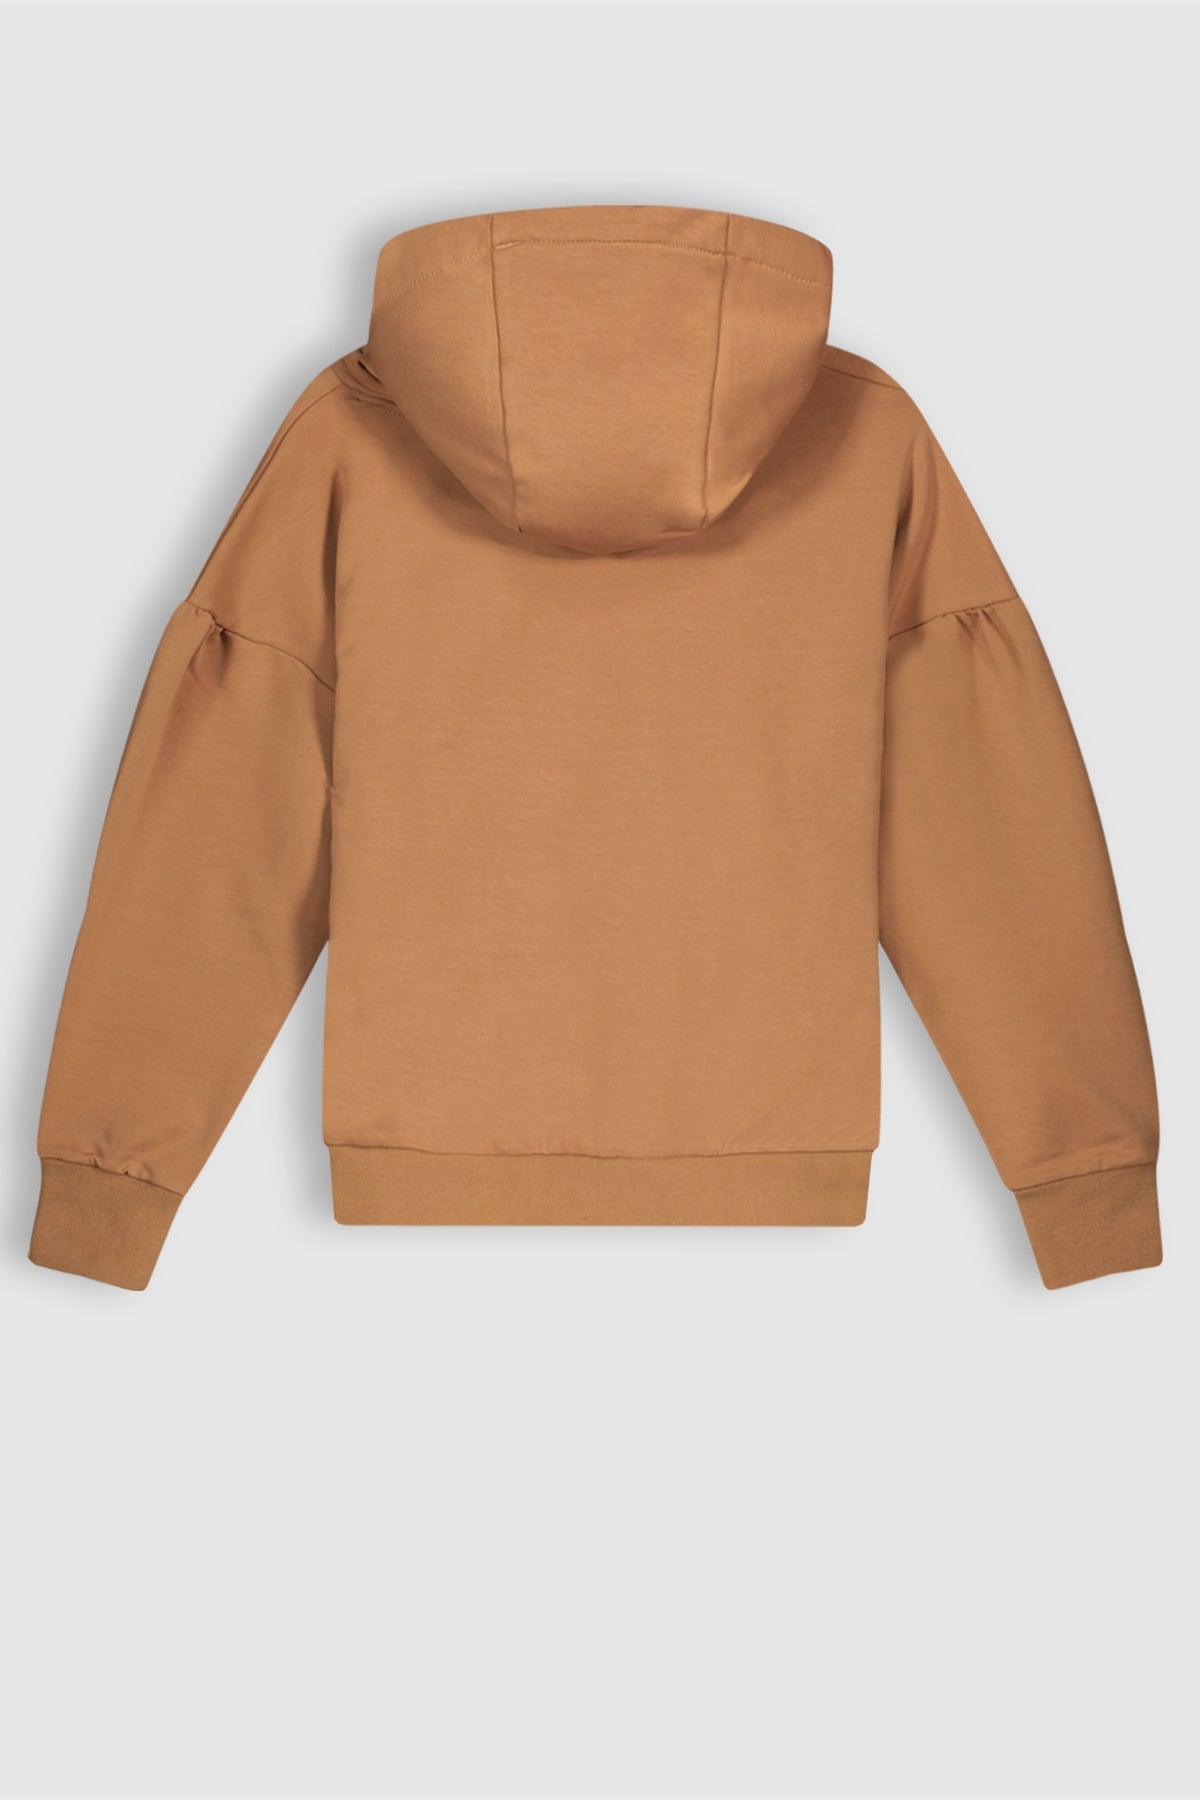 Kumy Furry Hooded Sweater - NoNo Kidswear